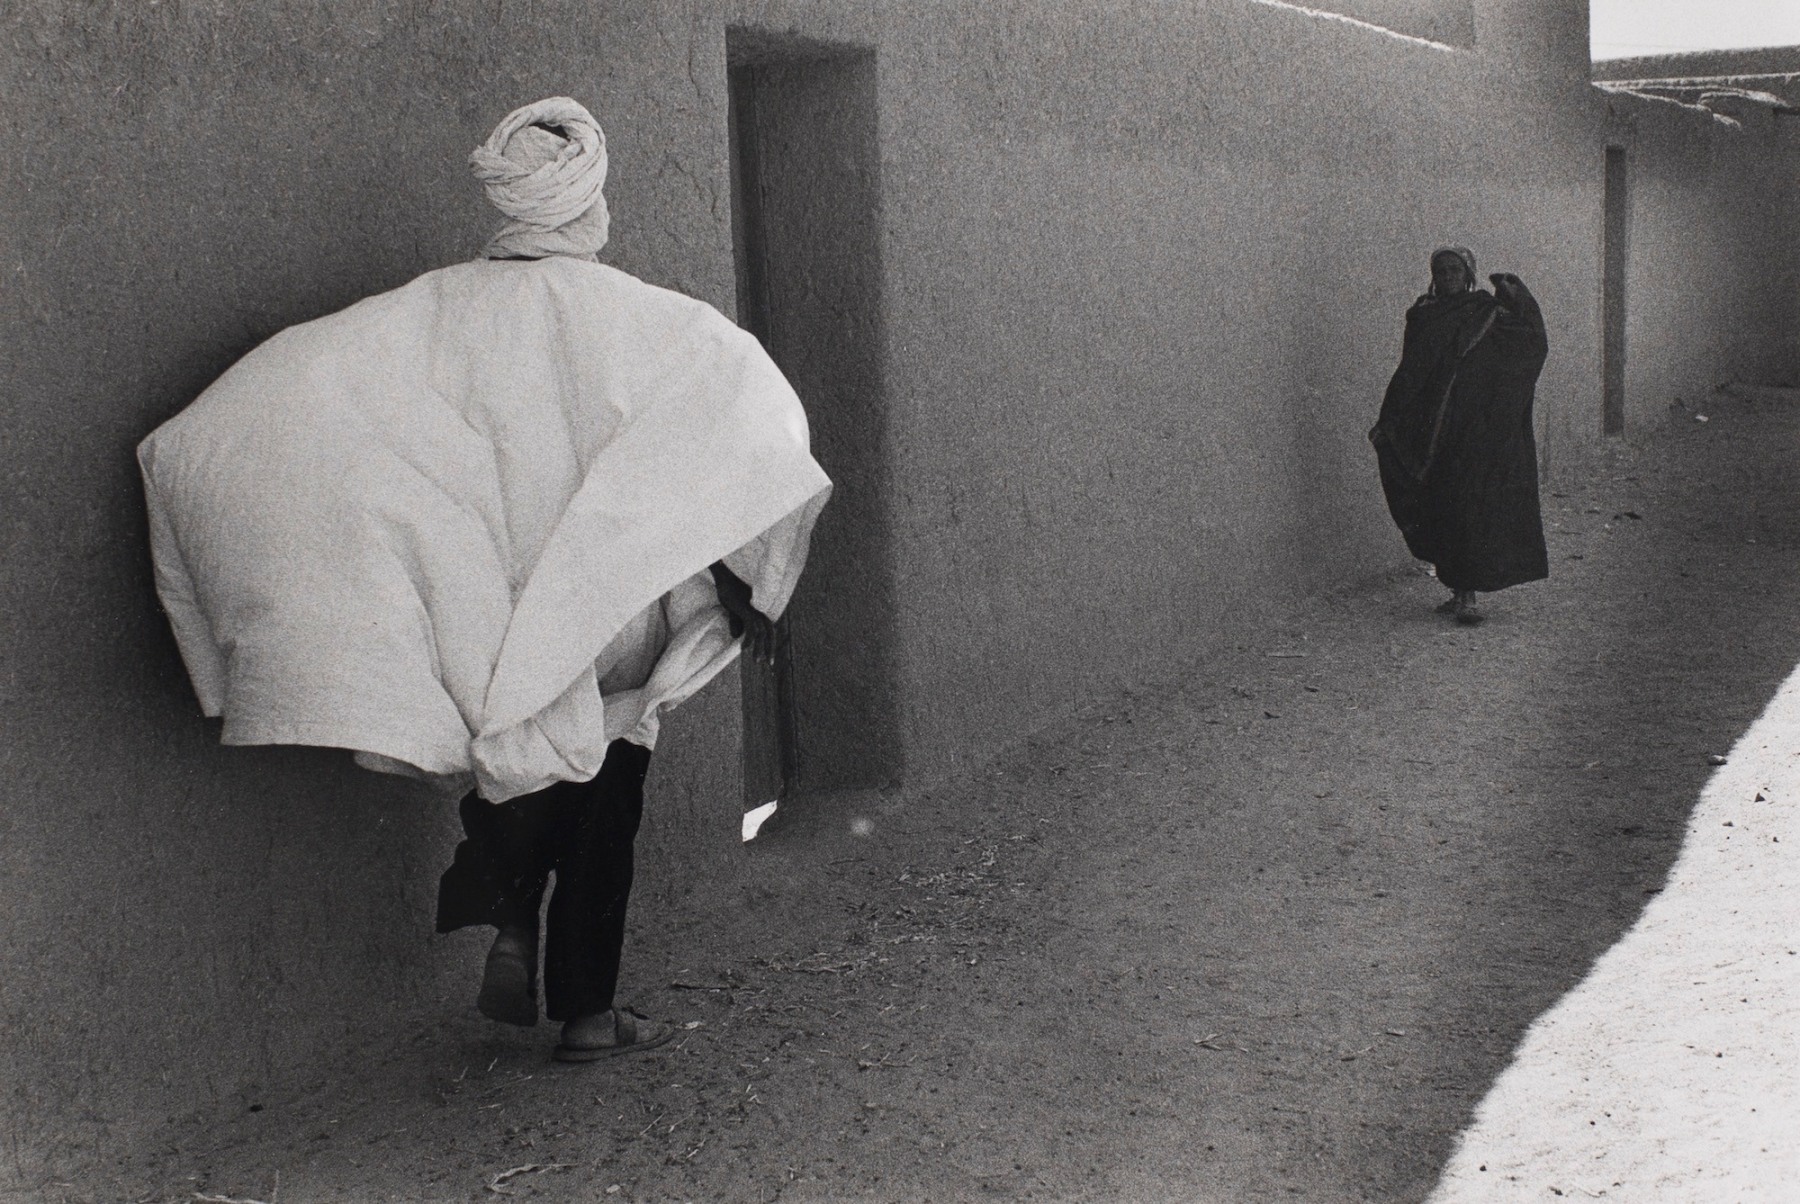 Bernard Plossu (1945-)  Acades, Niger, 1975  Gelatin silver print  12 x 16 inches (paper), black and white photography